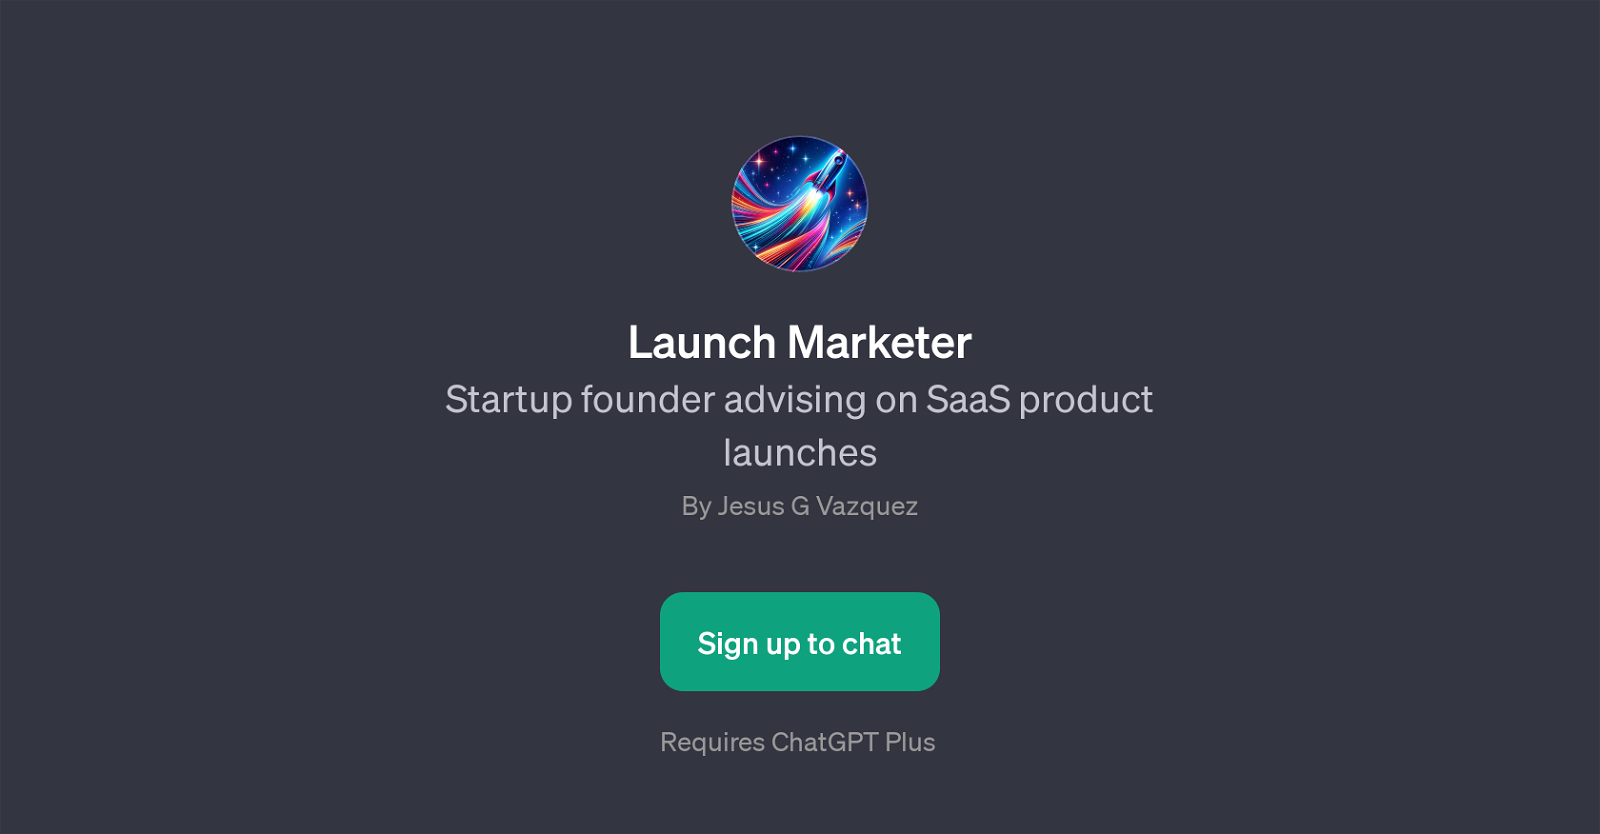 Launch Marketer website